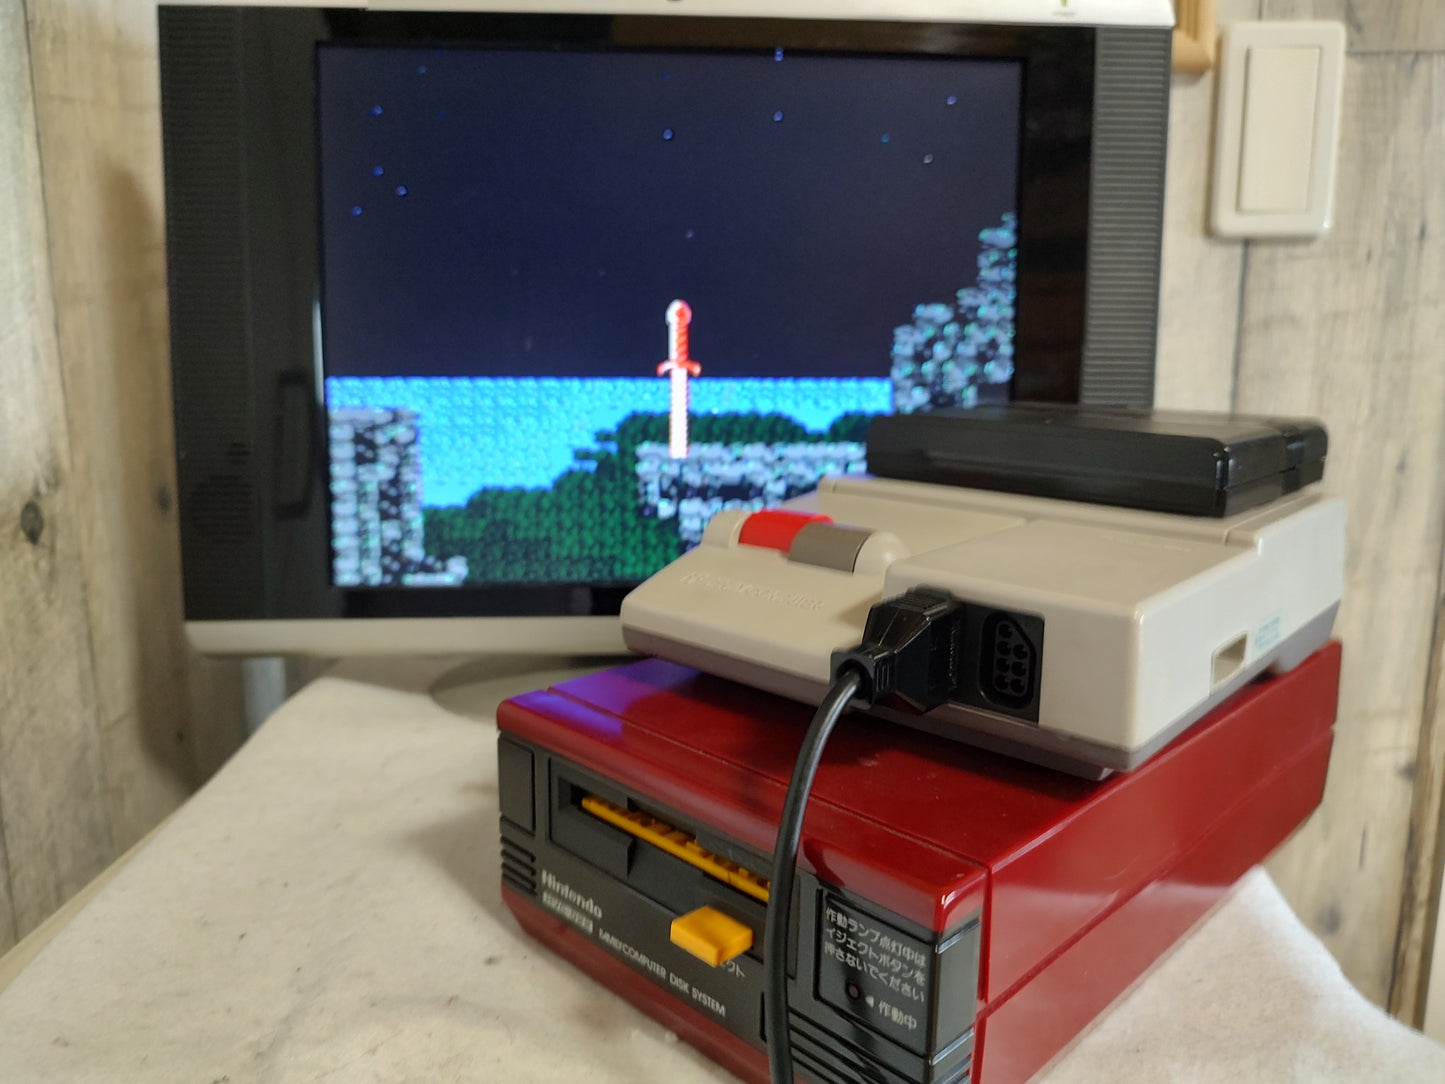 ZELDA 2 ADVENTURE OF LINK FAMICOM (NES) Disk System, Game disk and box-f0515-